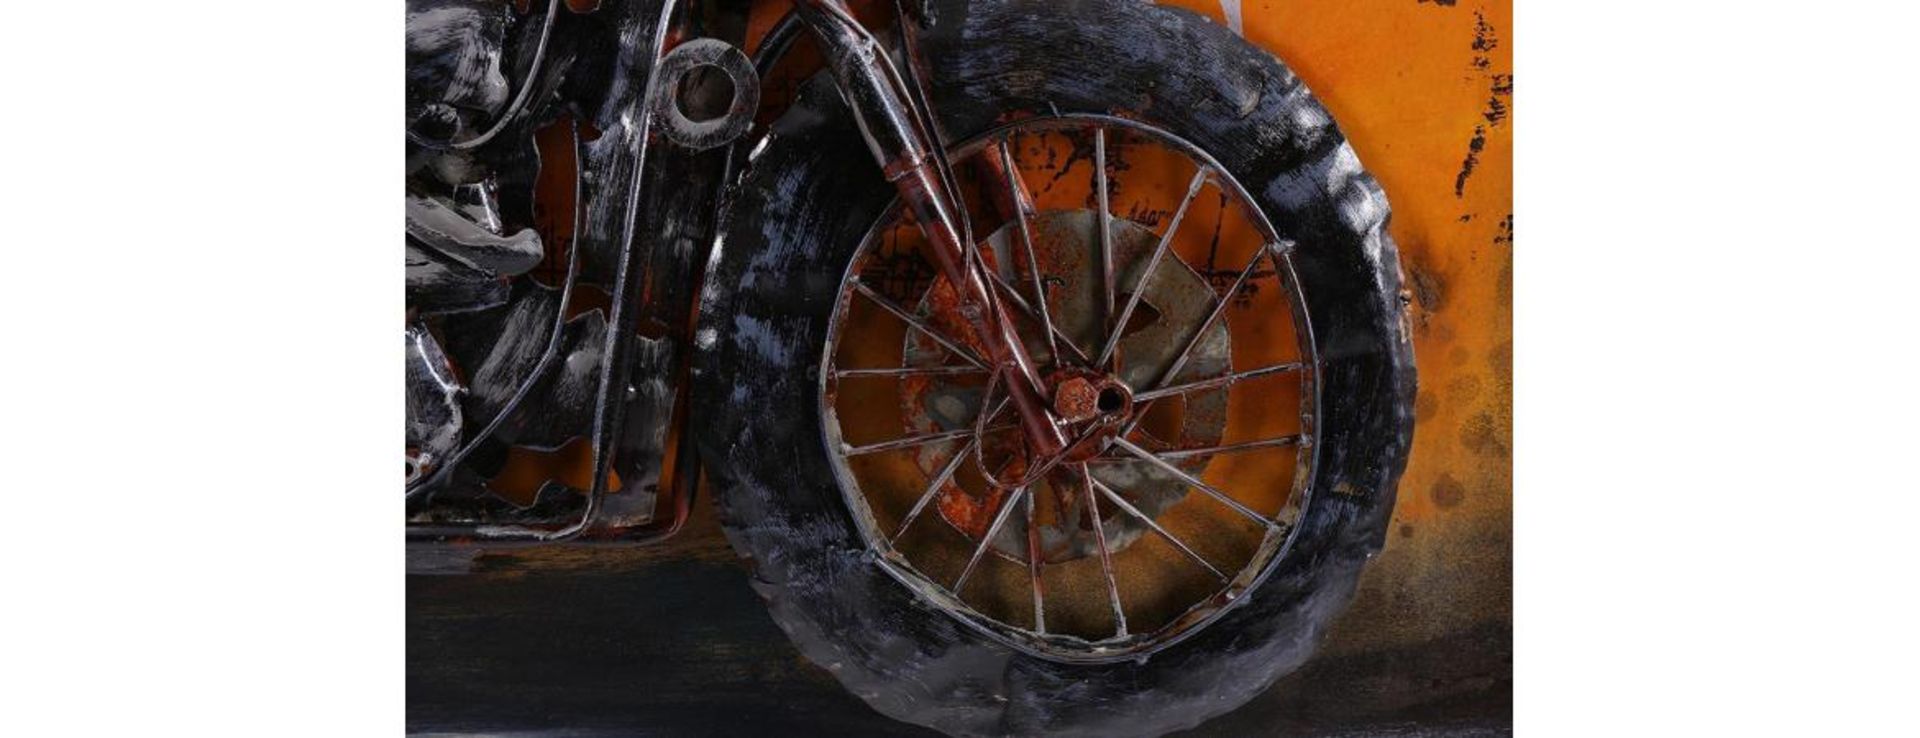 3D Metal Blue Triumph Motorbike Painting - Image 5 of 9